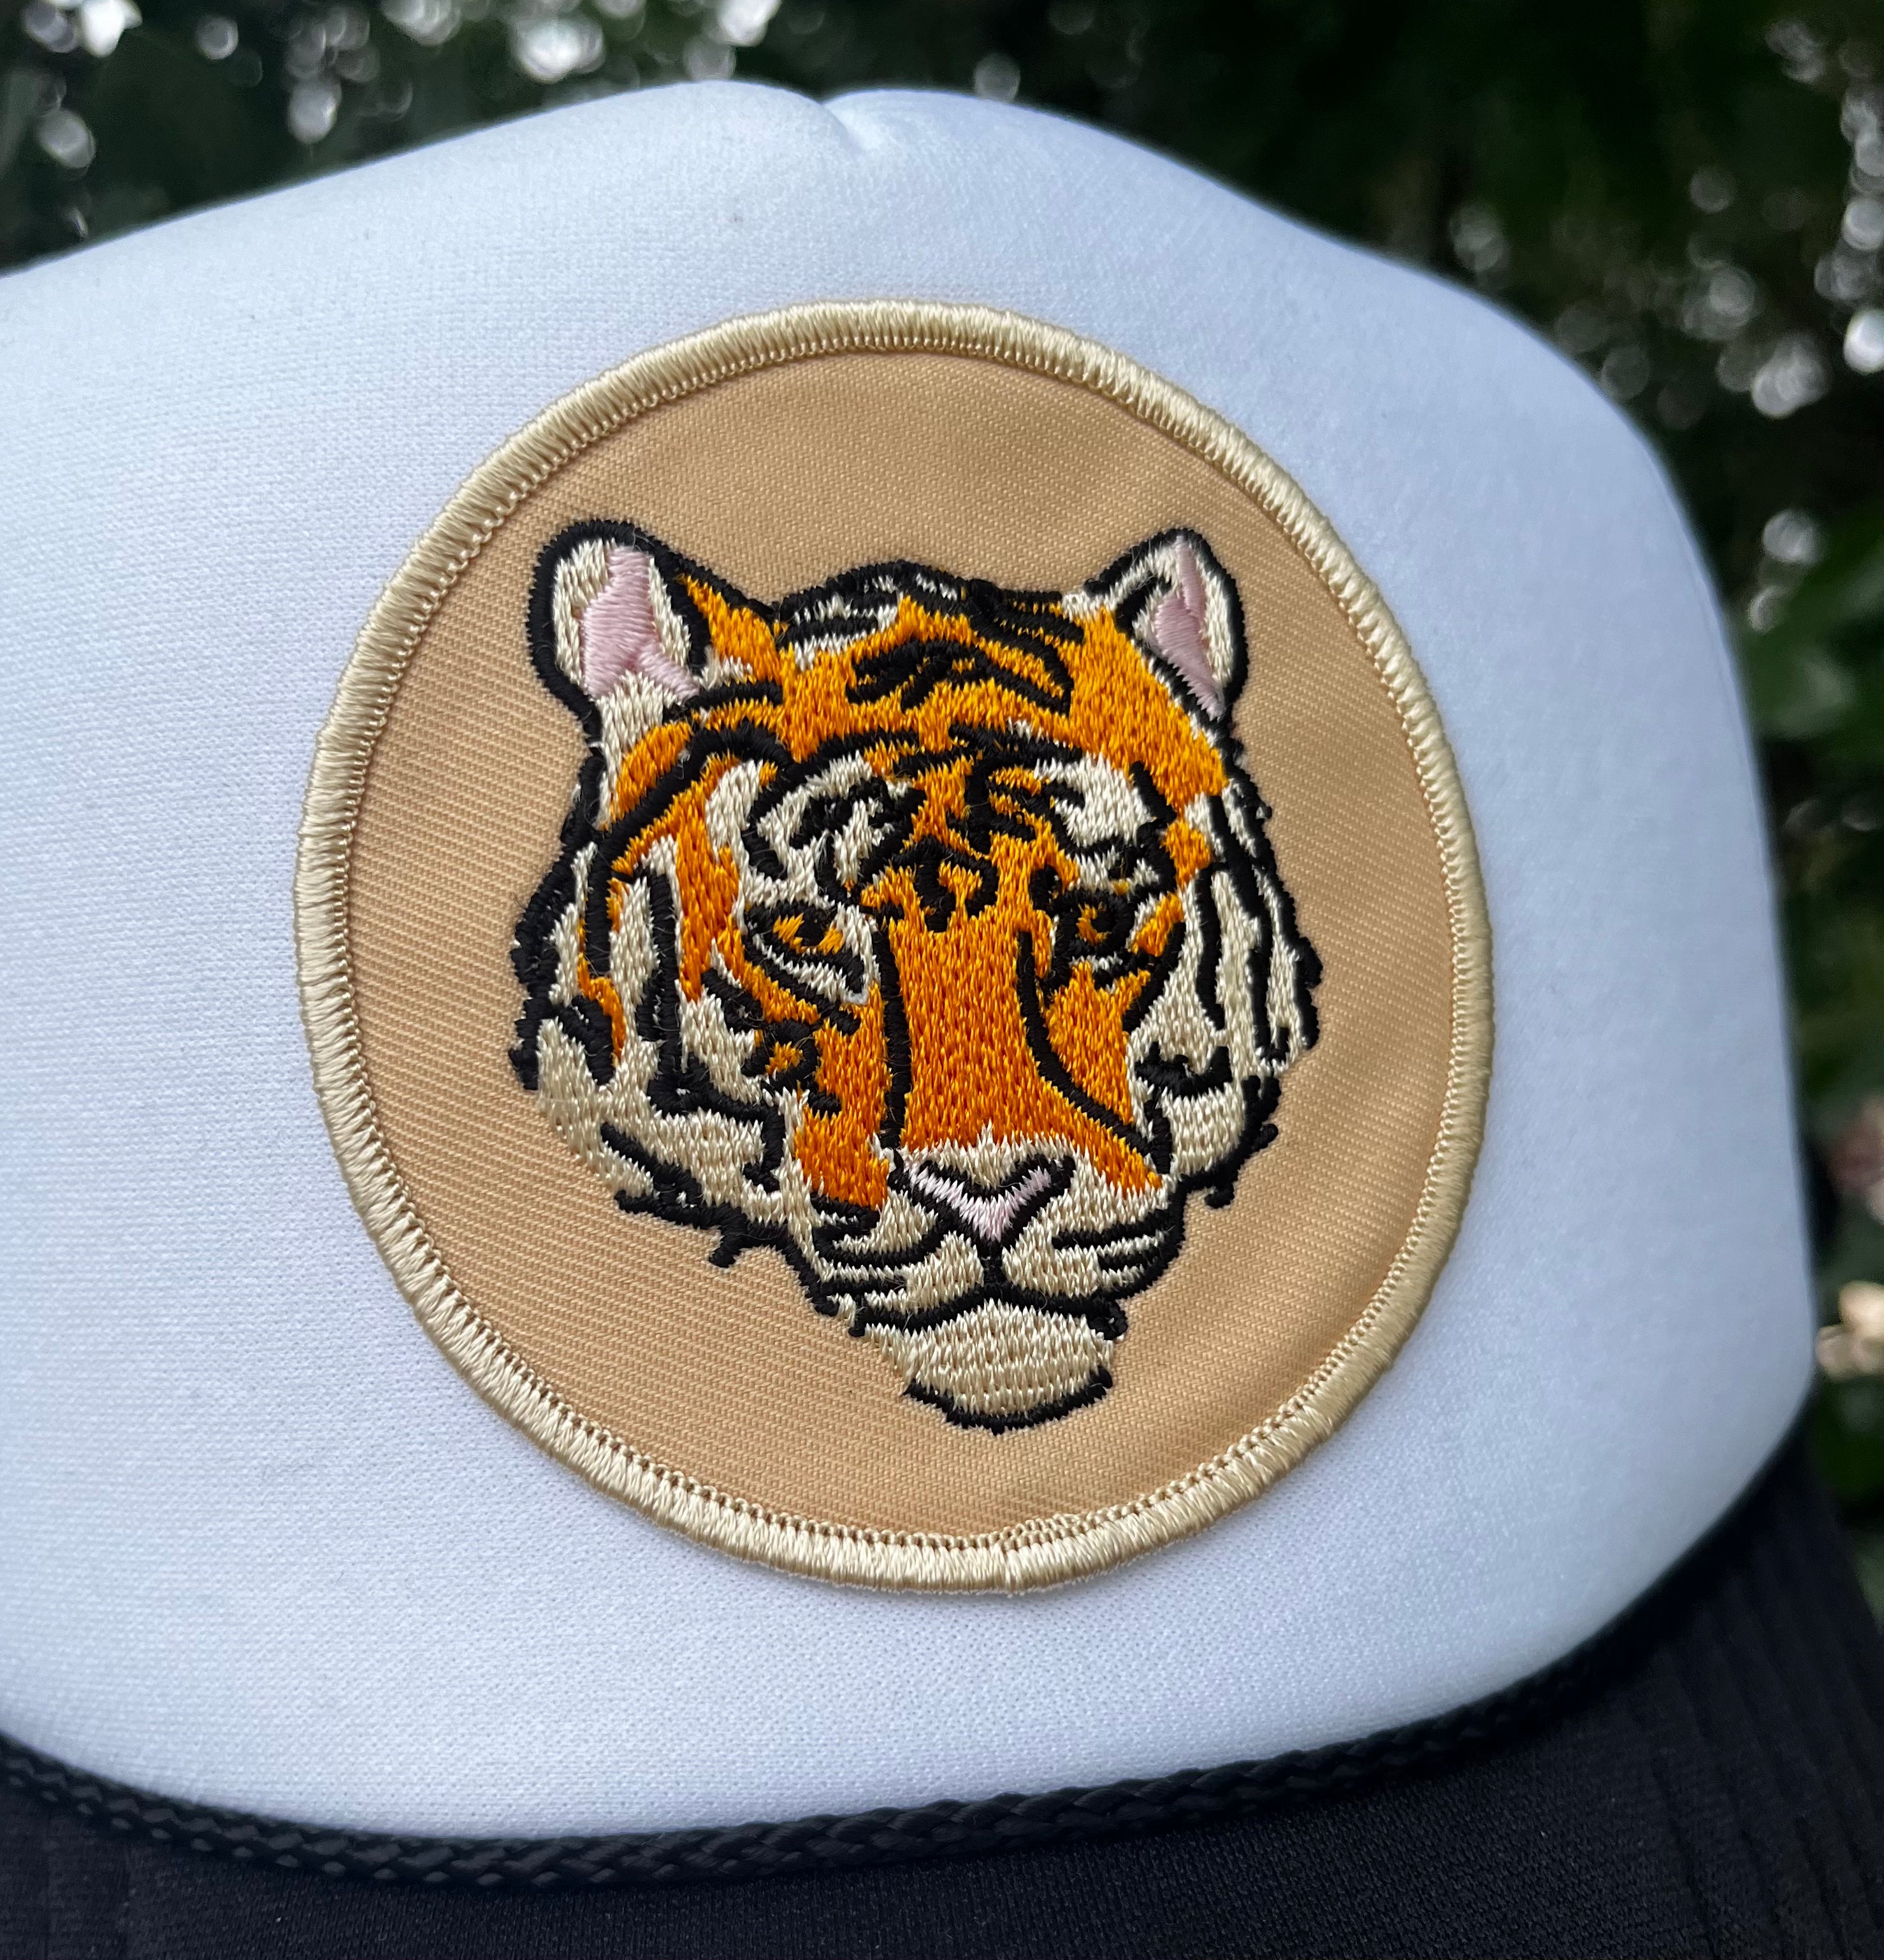 Tiger Head Trucker Hat